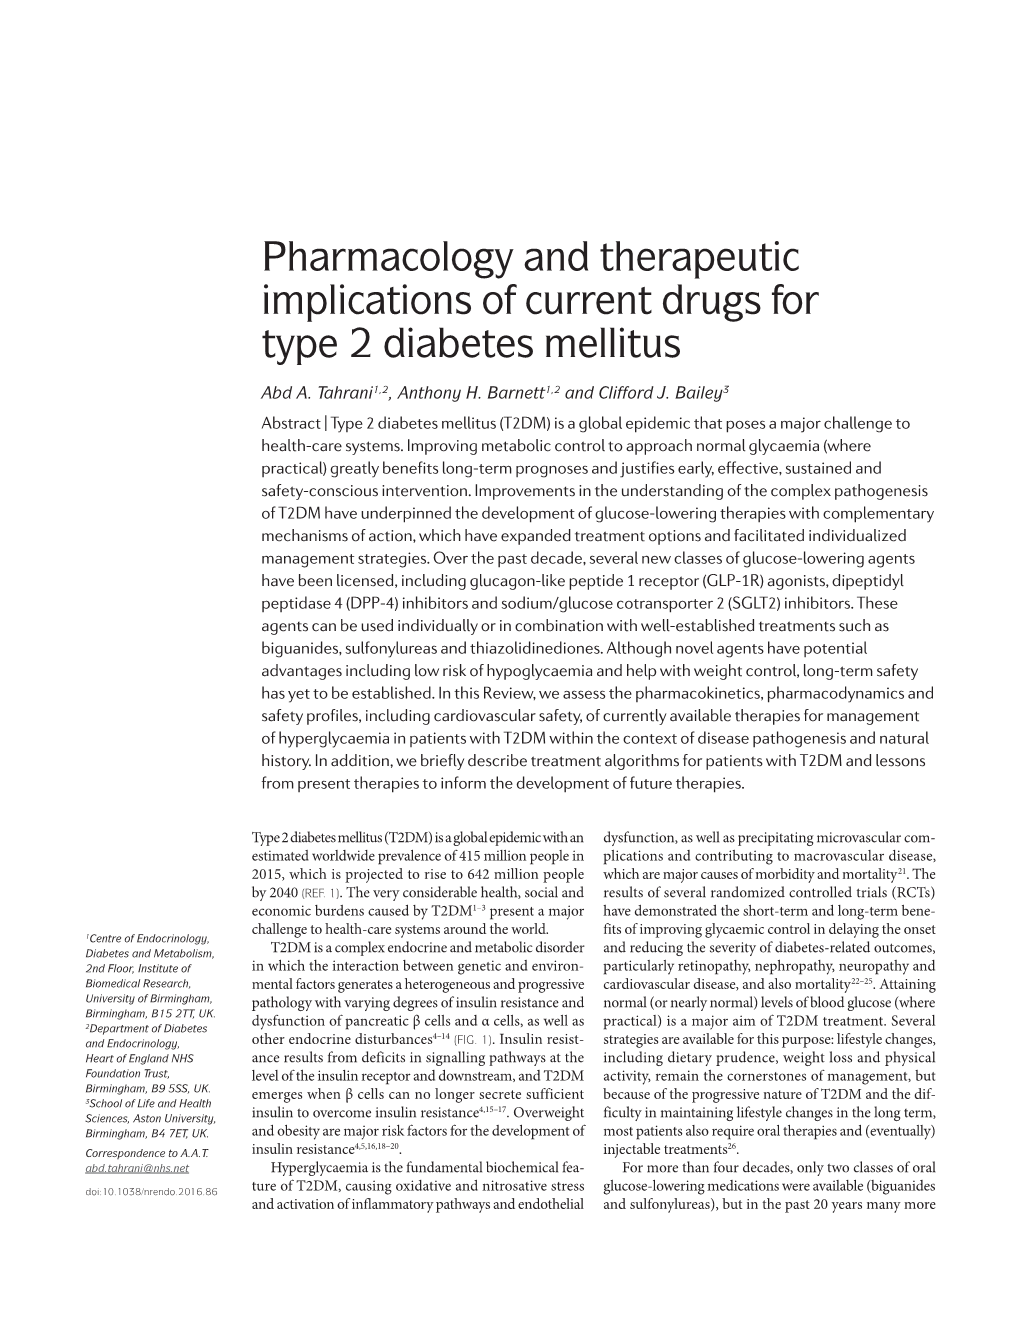 Implications Current Drugs for Type 2 Diabetes Mellitus